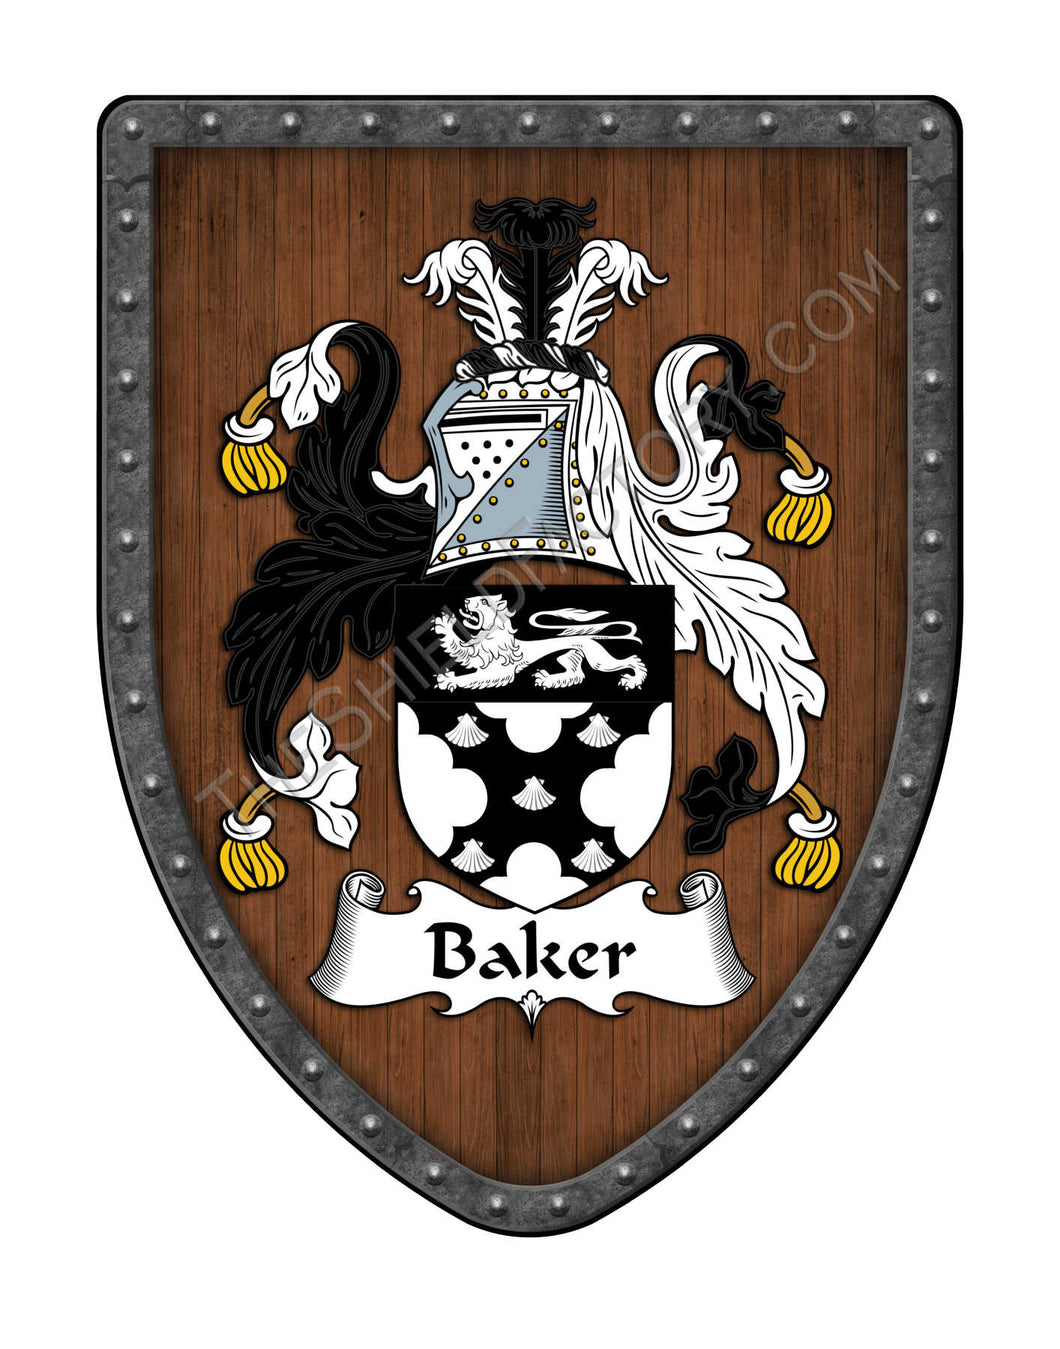 Baker Family Coat of Arms